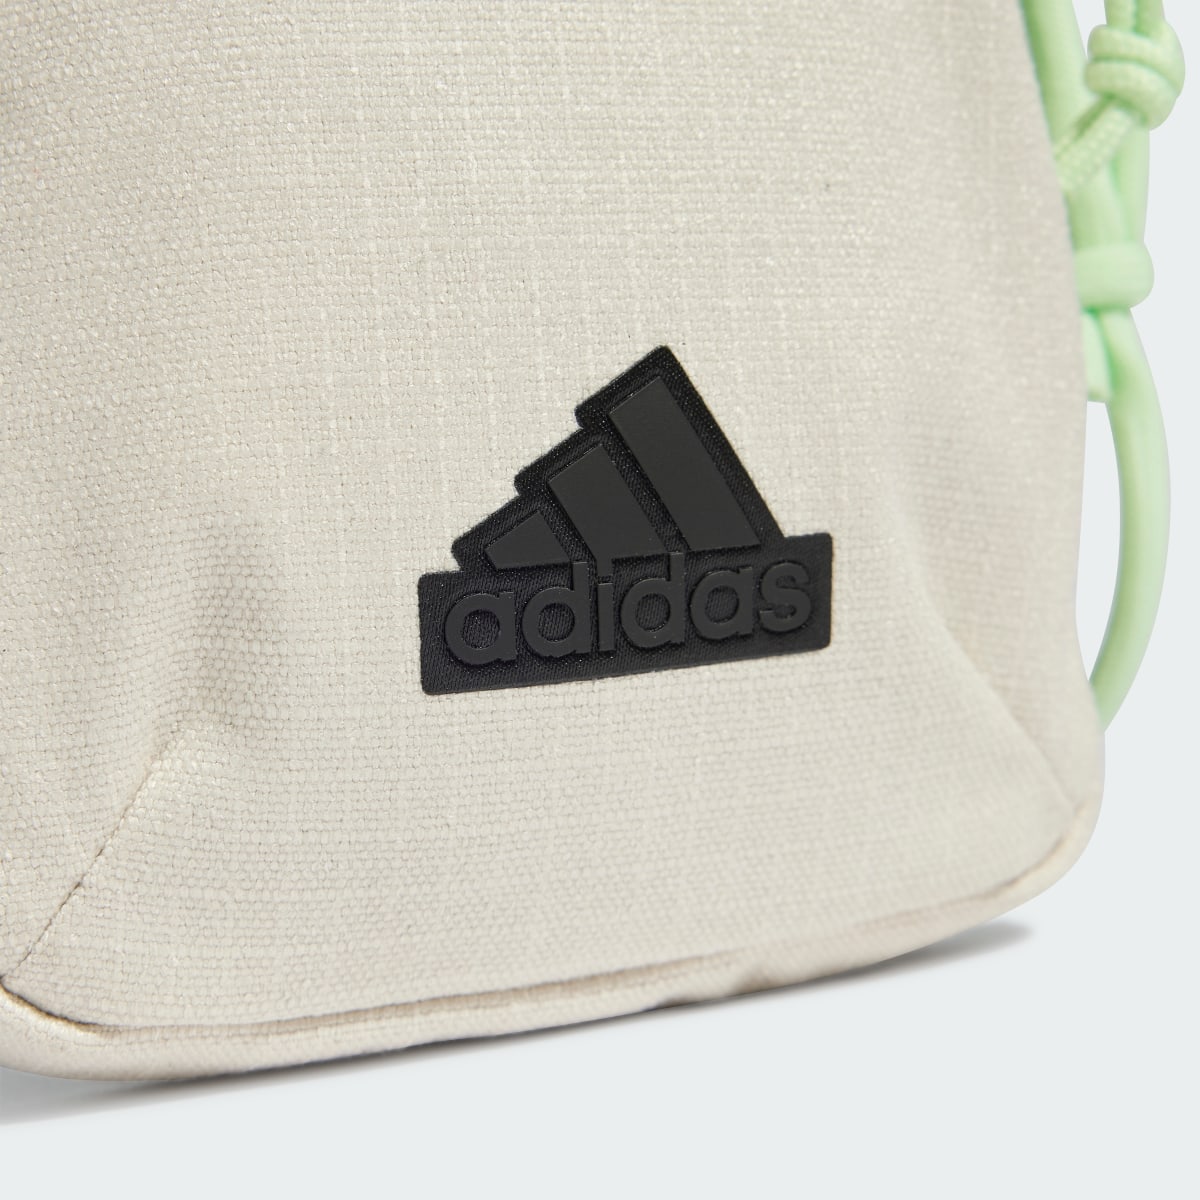 Adidas Xplorer Small Bag. 6